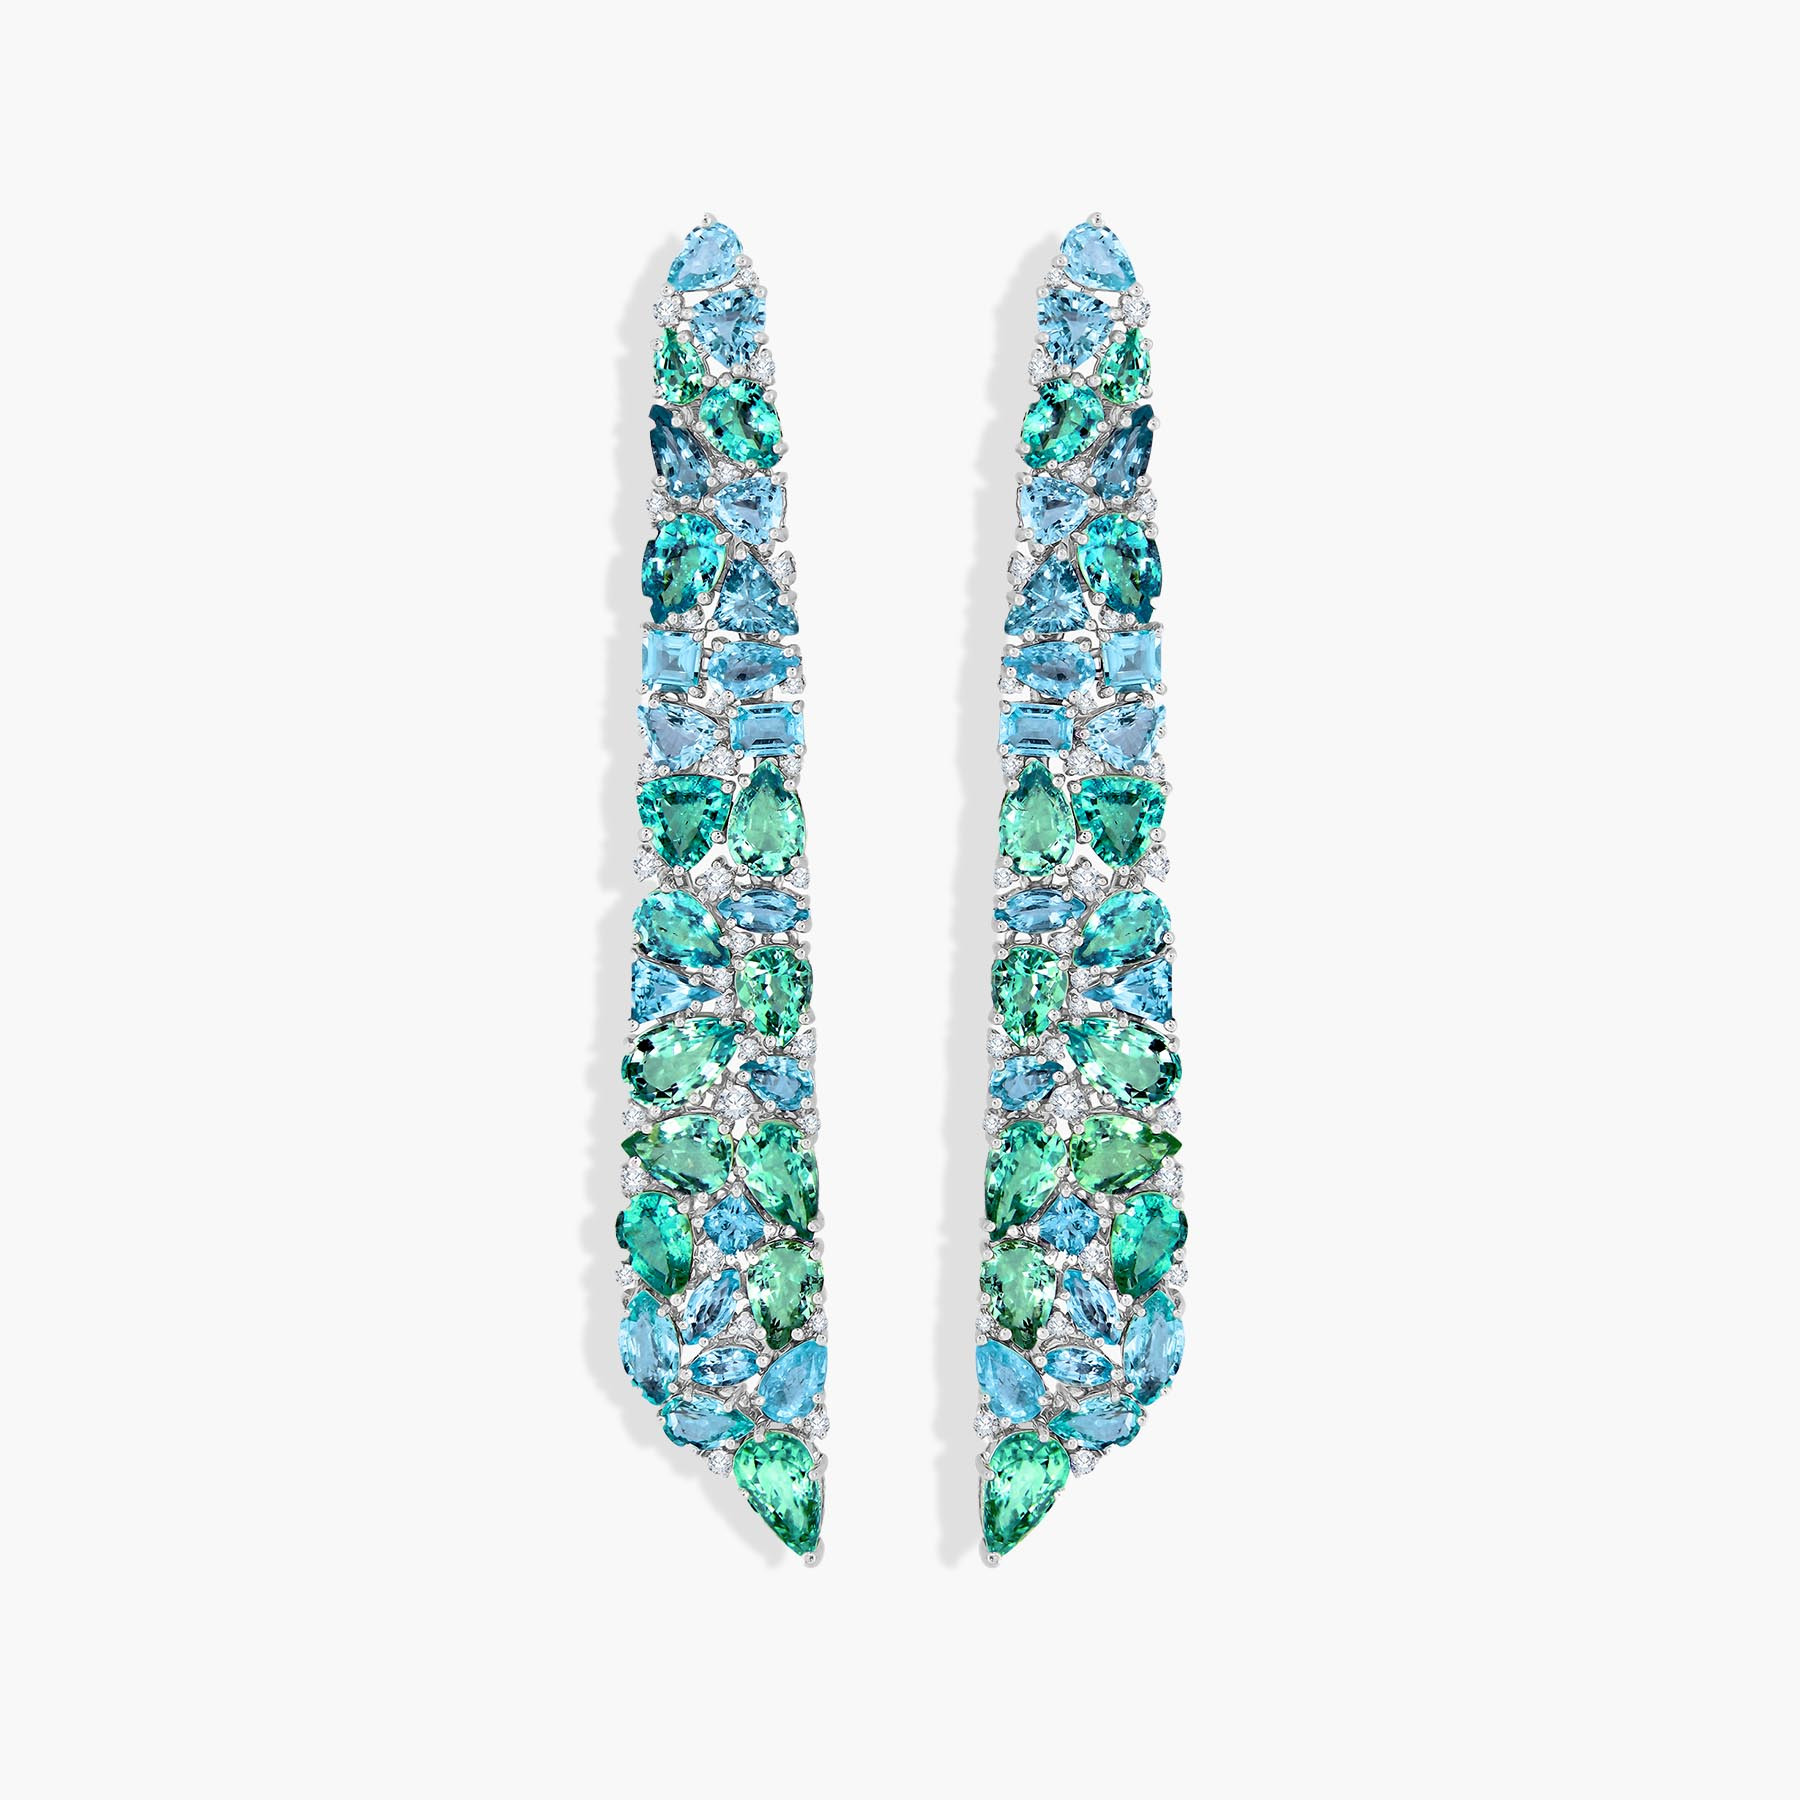 PARAIBA TOURMALINE Earrings, Teardrop and Emerald Cut Blue Drop Earrings,  Sterling Silver Post Stud Earrings, Anniversary Gifts for Her - Etsy